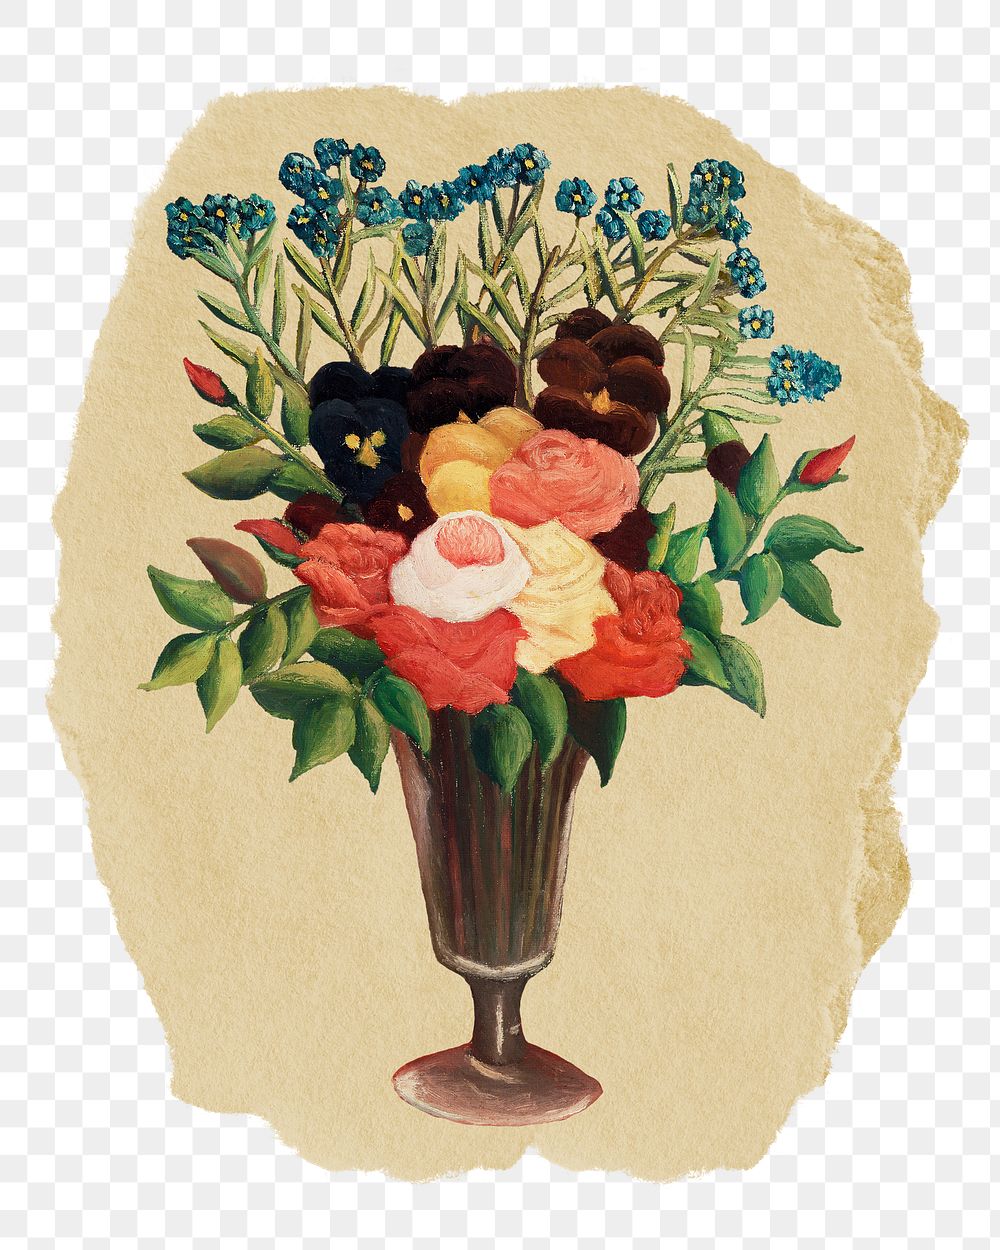 Png flowers in a vase sticker, floral vintage illustration on ripped paper, transparent background